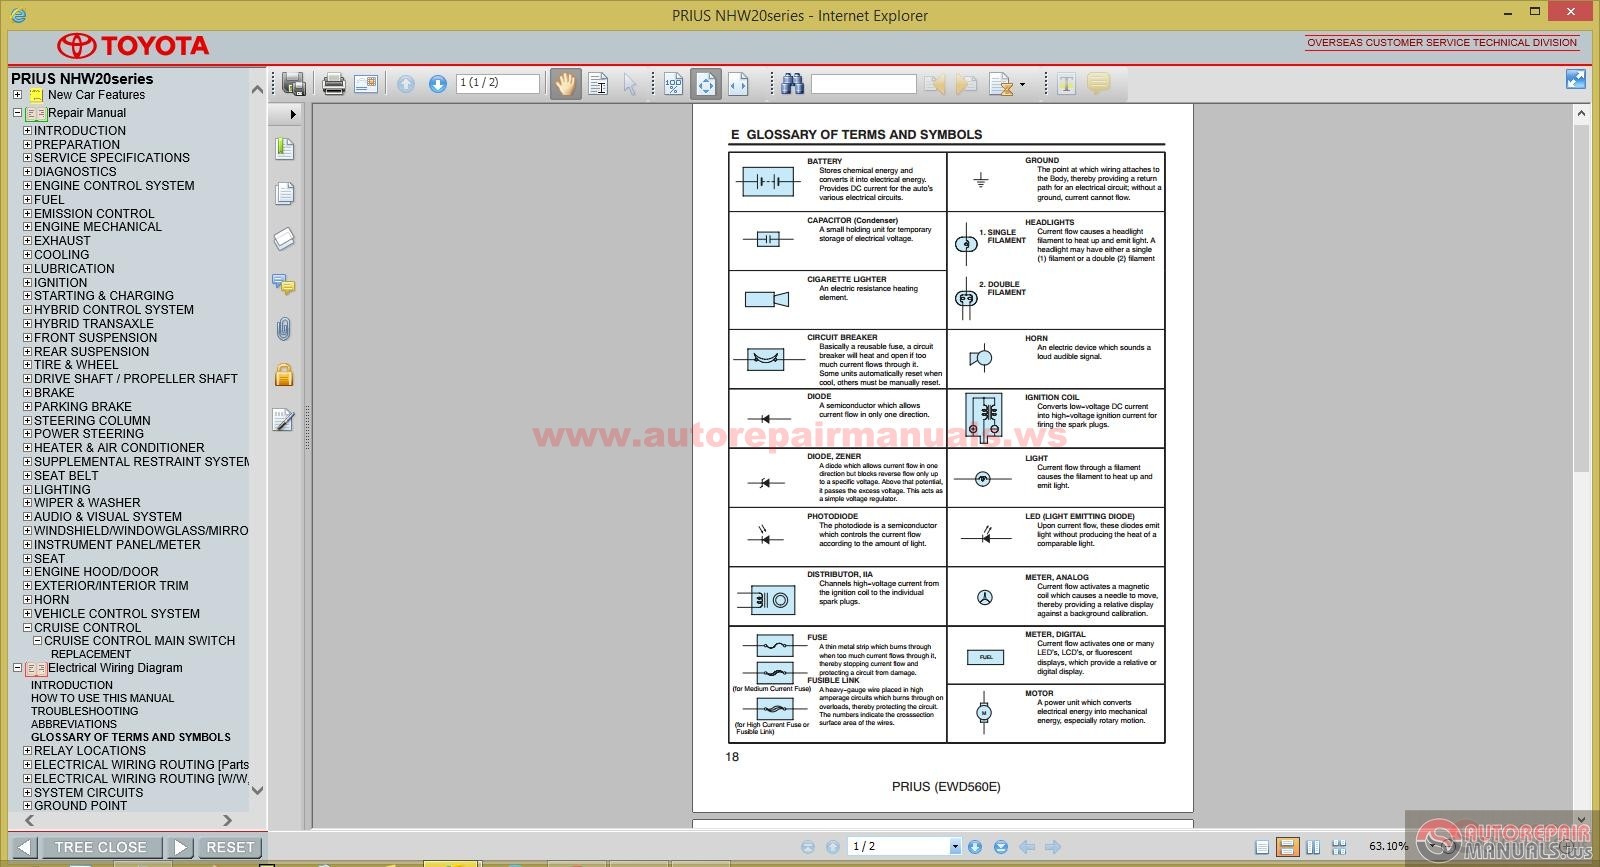 2008 toyota avalon owners manual pdf #2